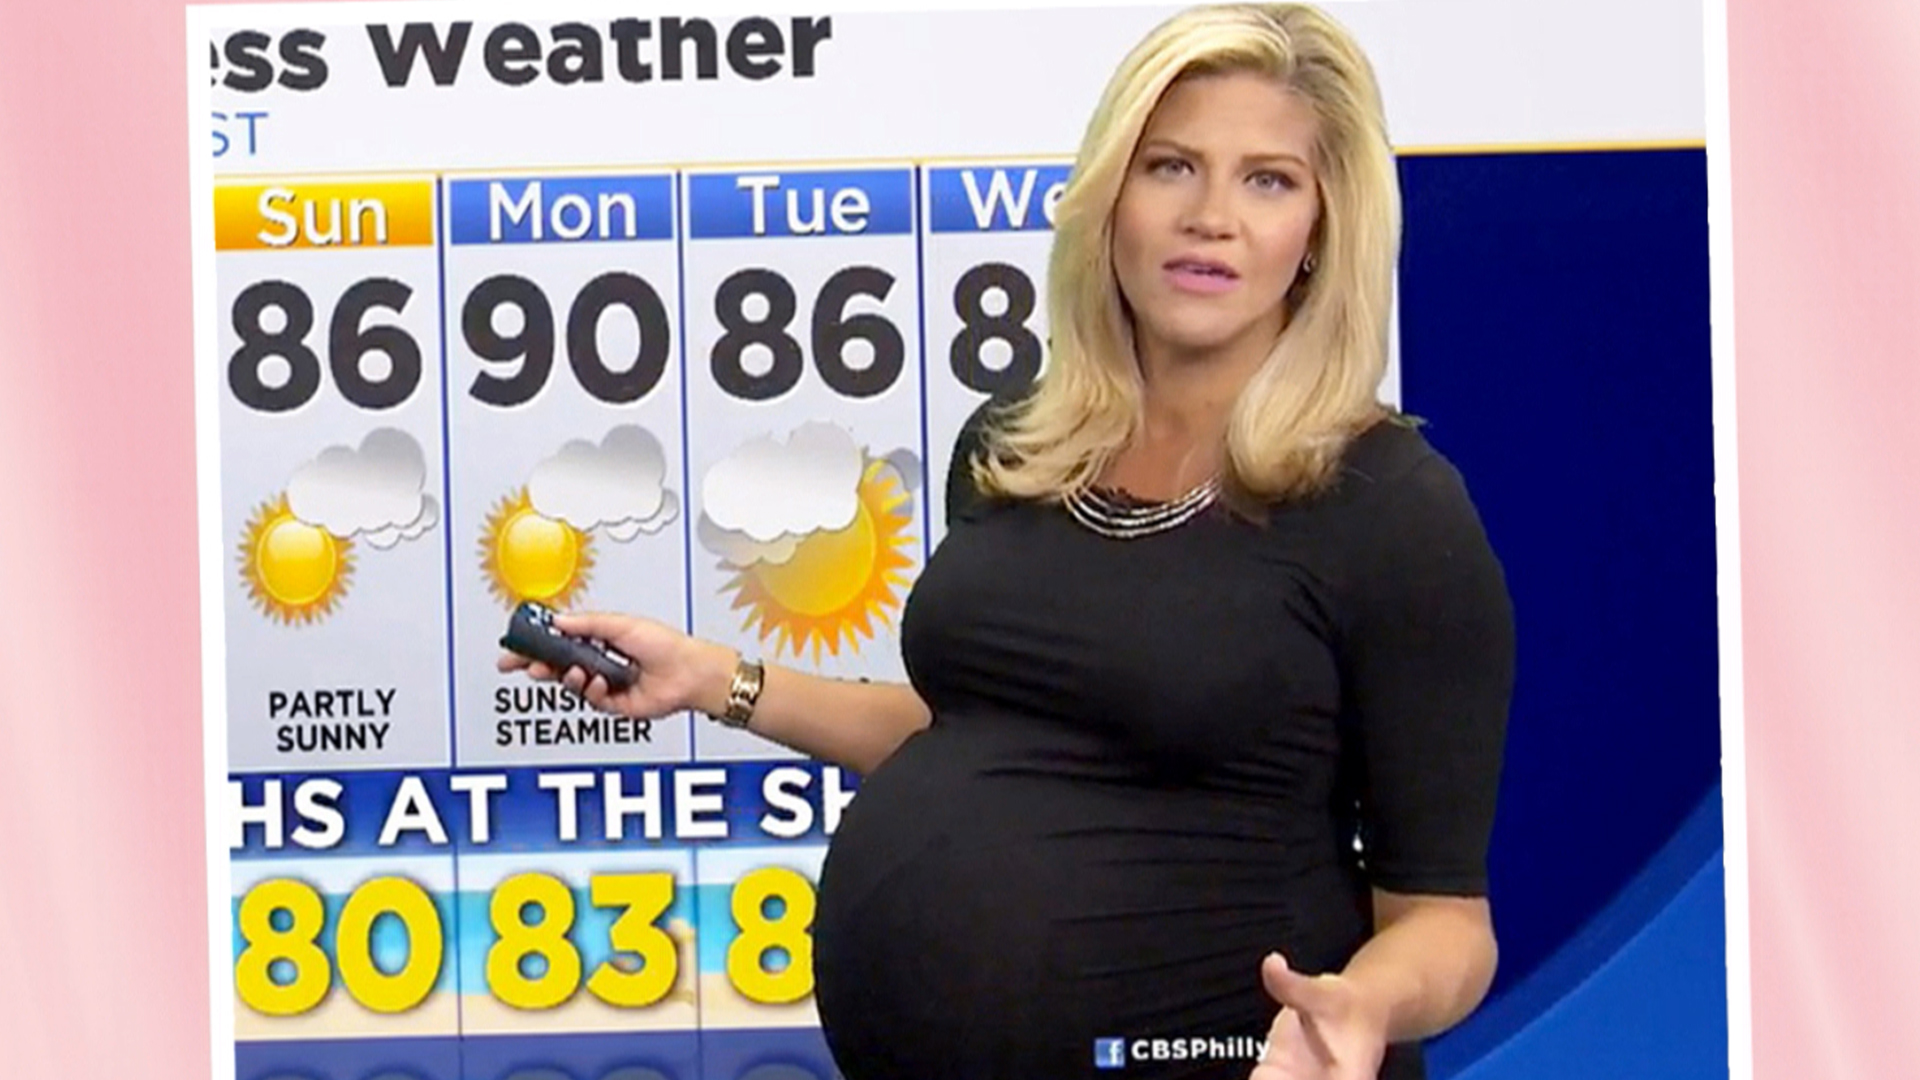 Pregnant Meteorologist fights back after body shaming incident.